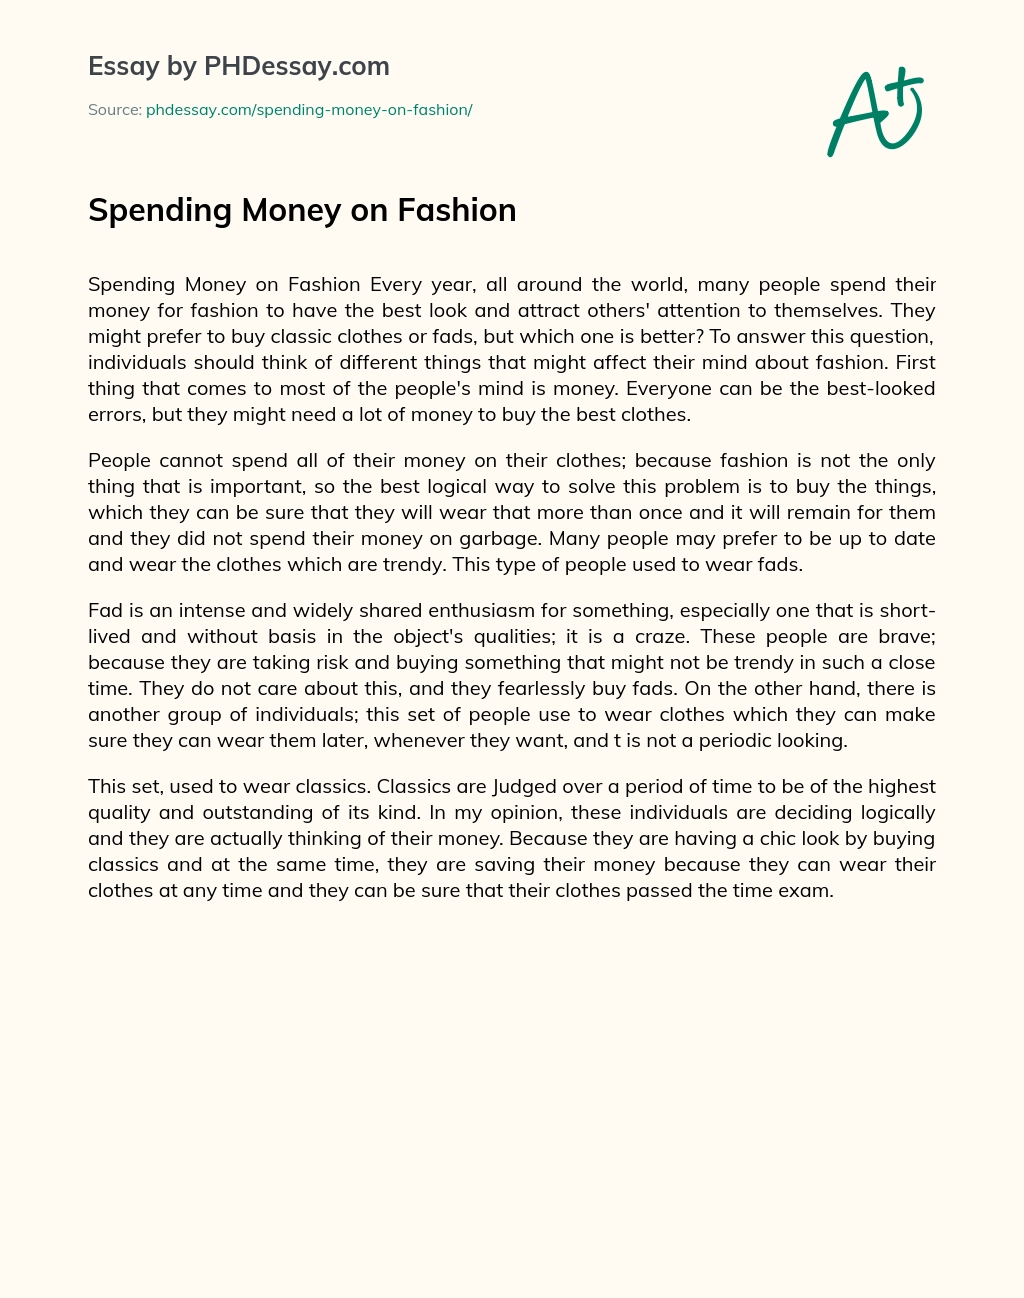 Spending Money on Fashion essay